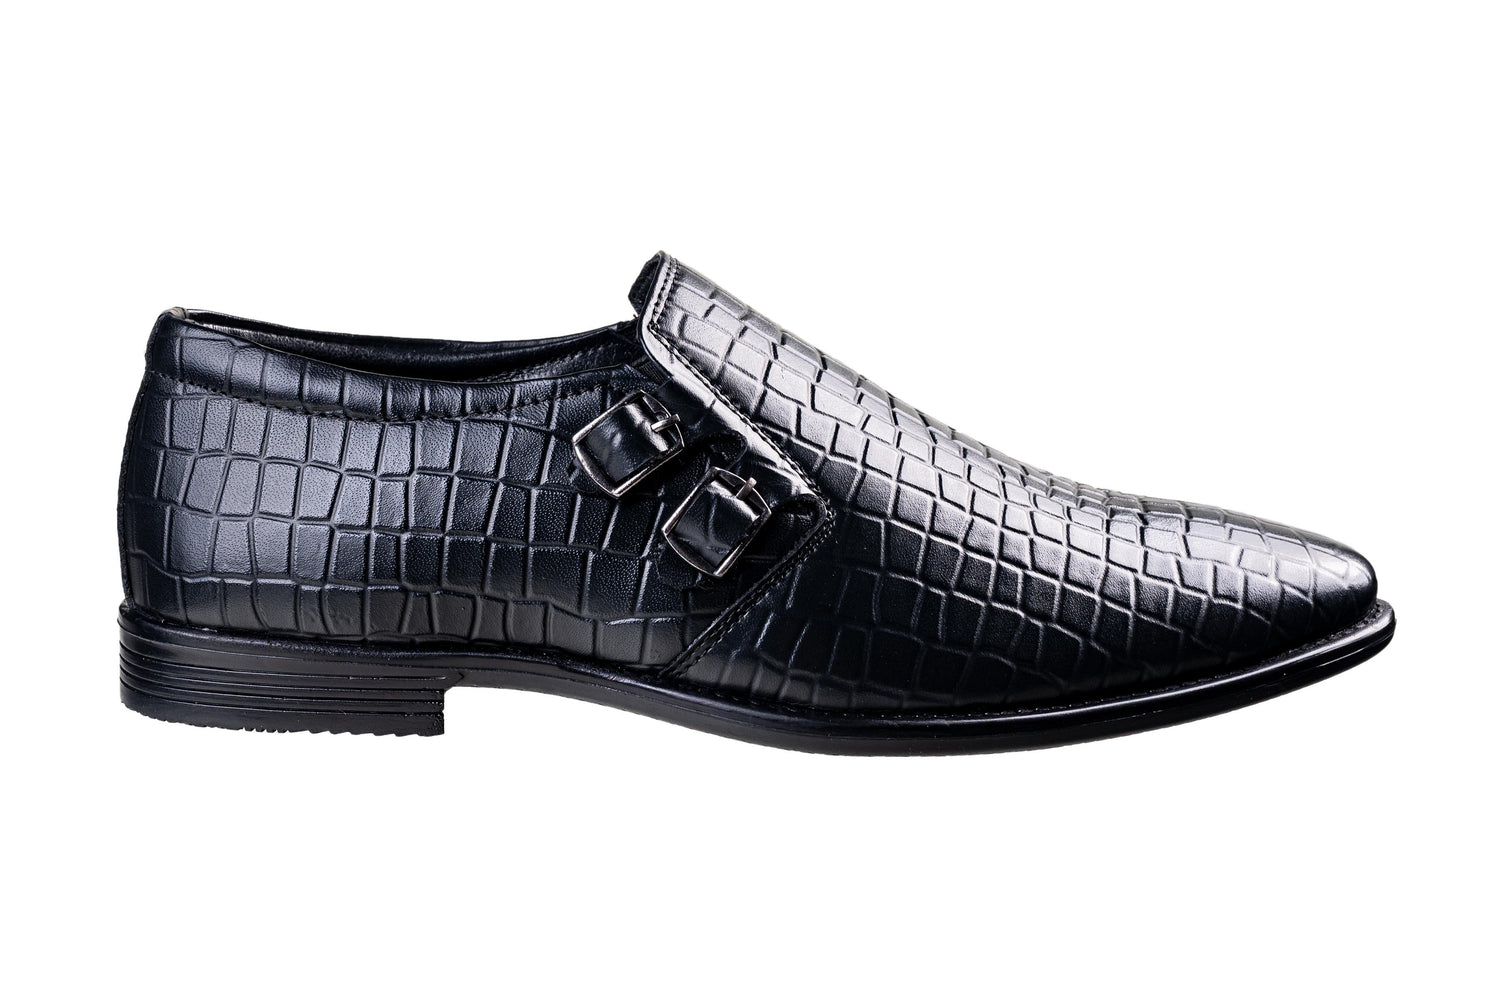 Beresford Gents Black Shoe